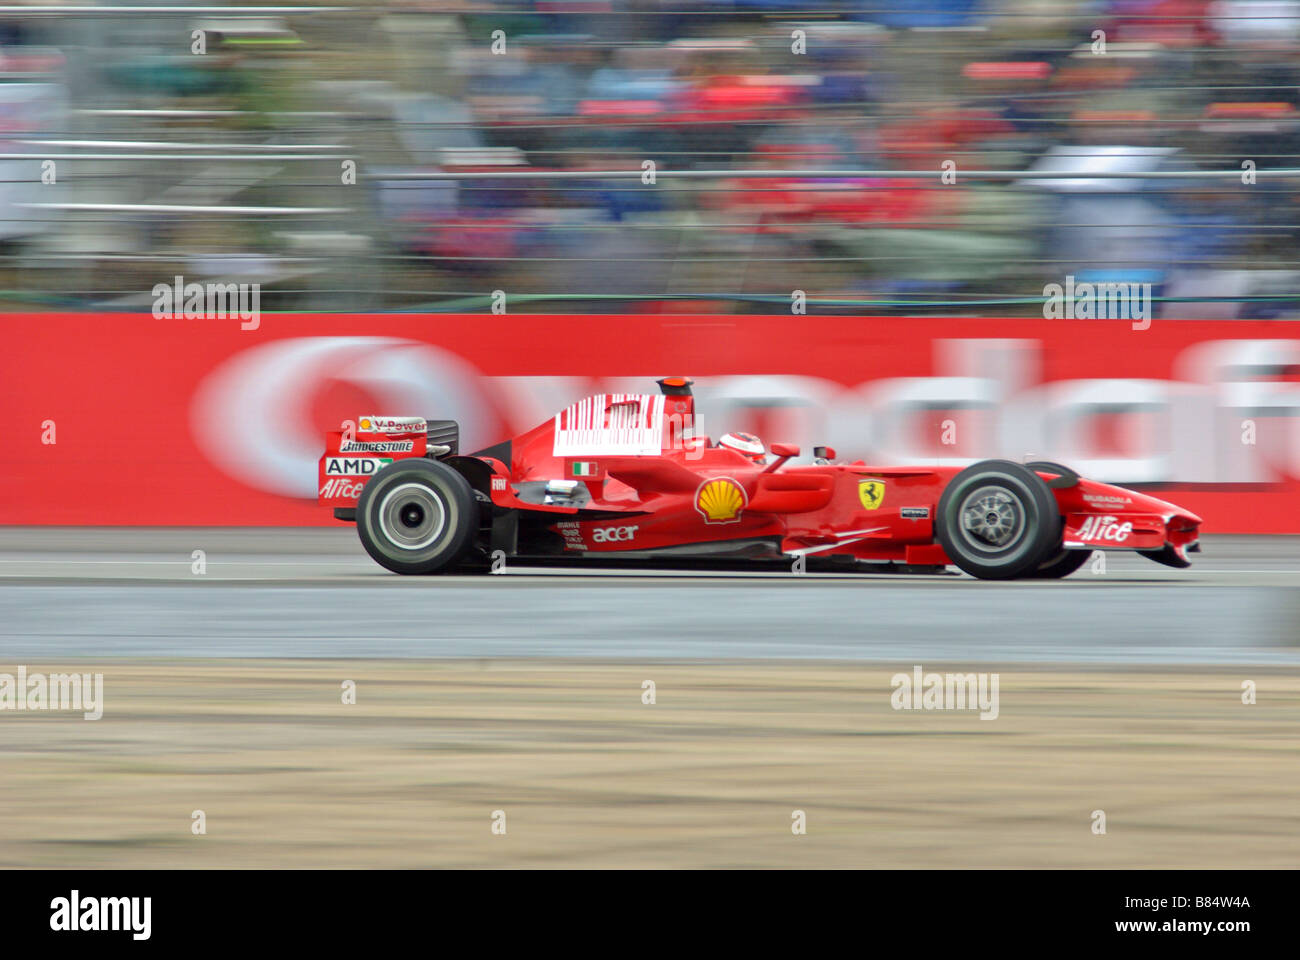 Kimi Raikkonen en el Gran Premio de Gran Bretaña de 2008 Foto de stock